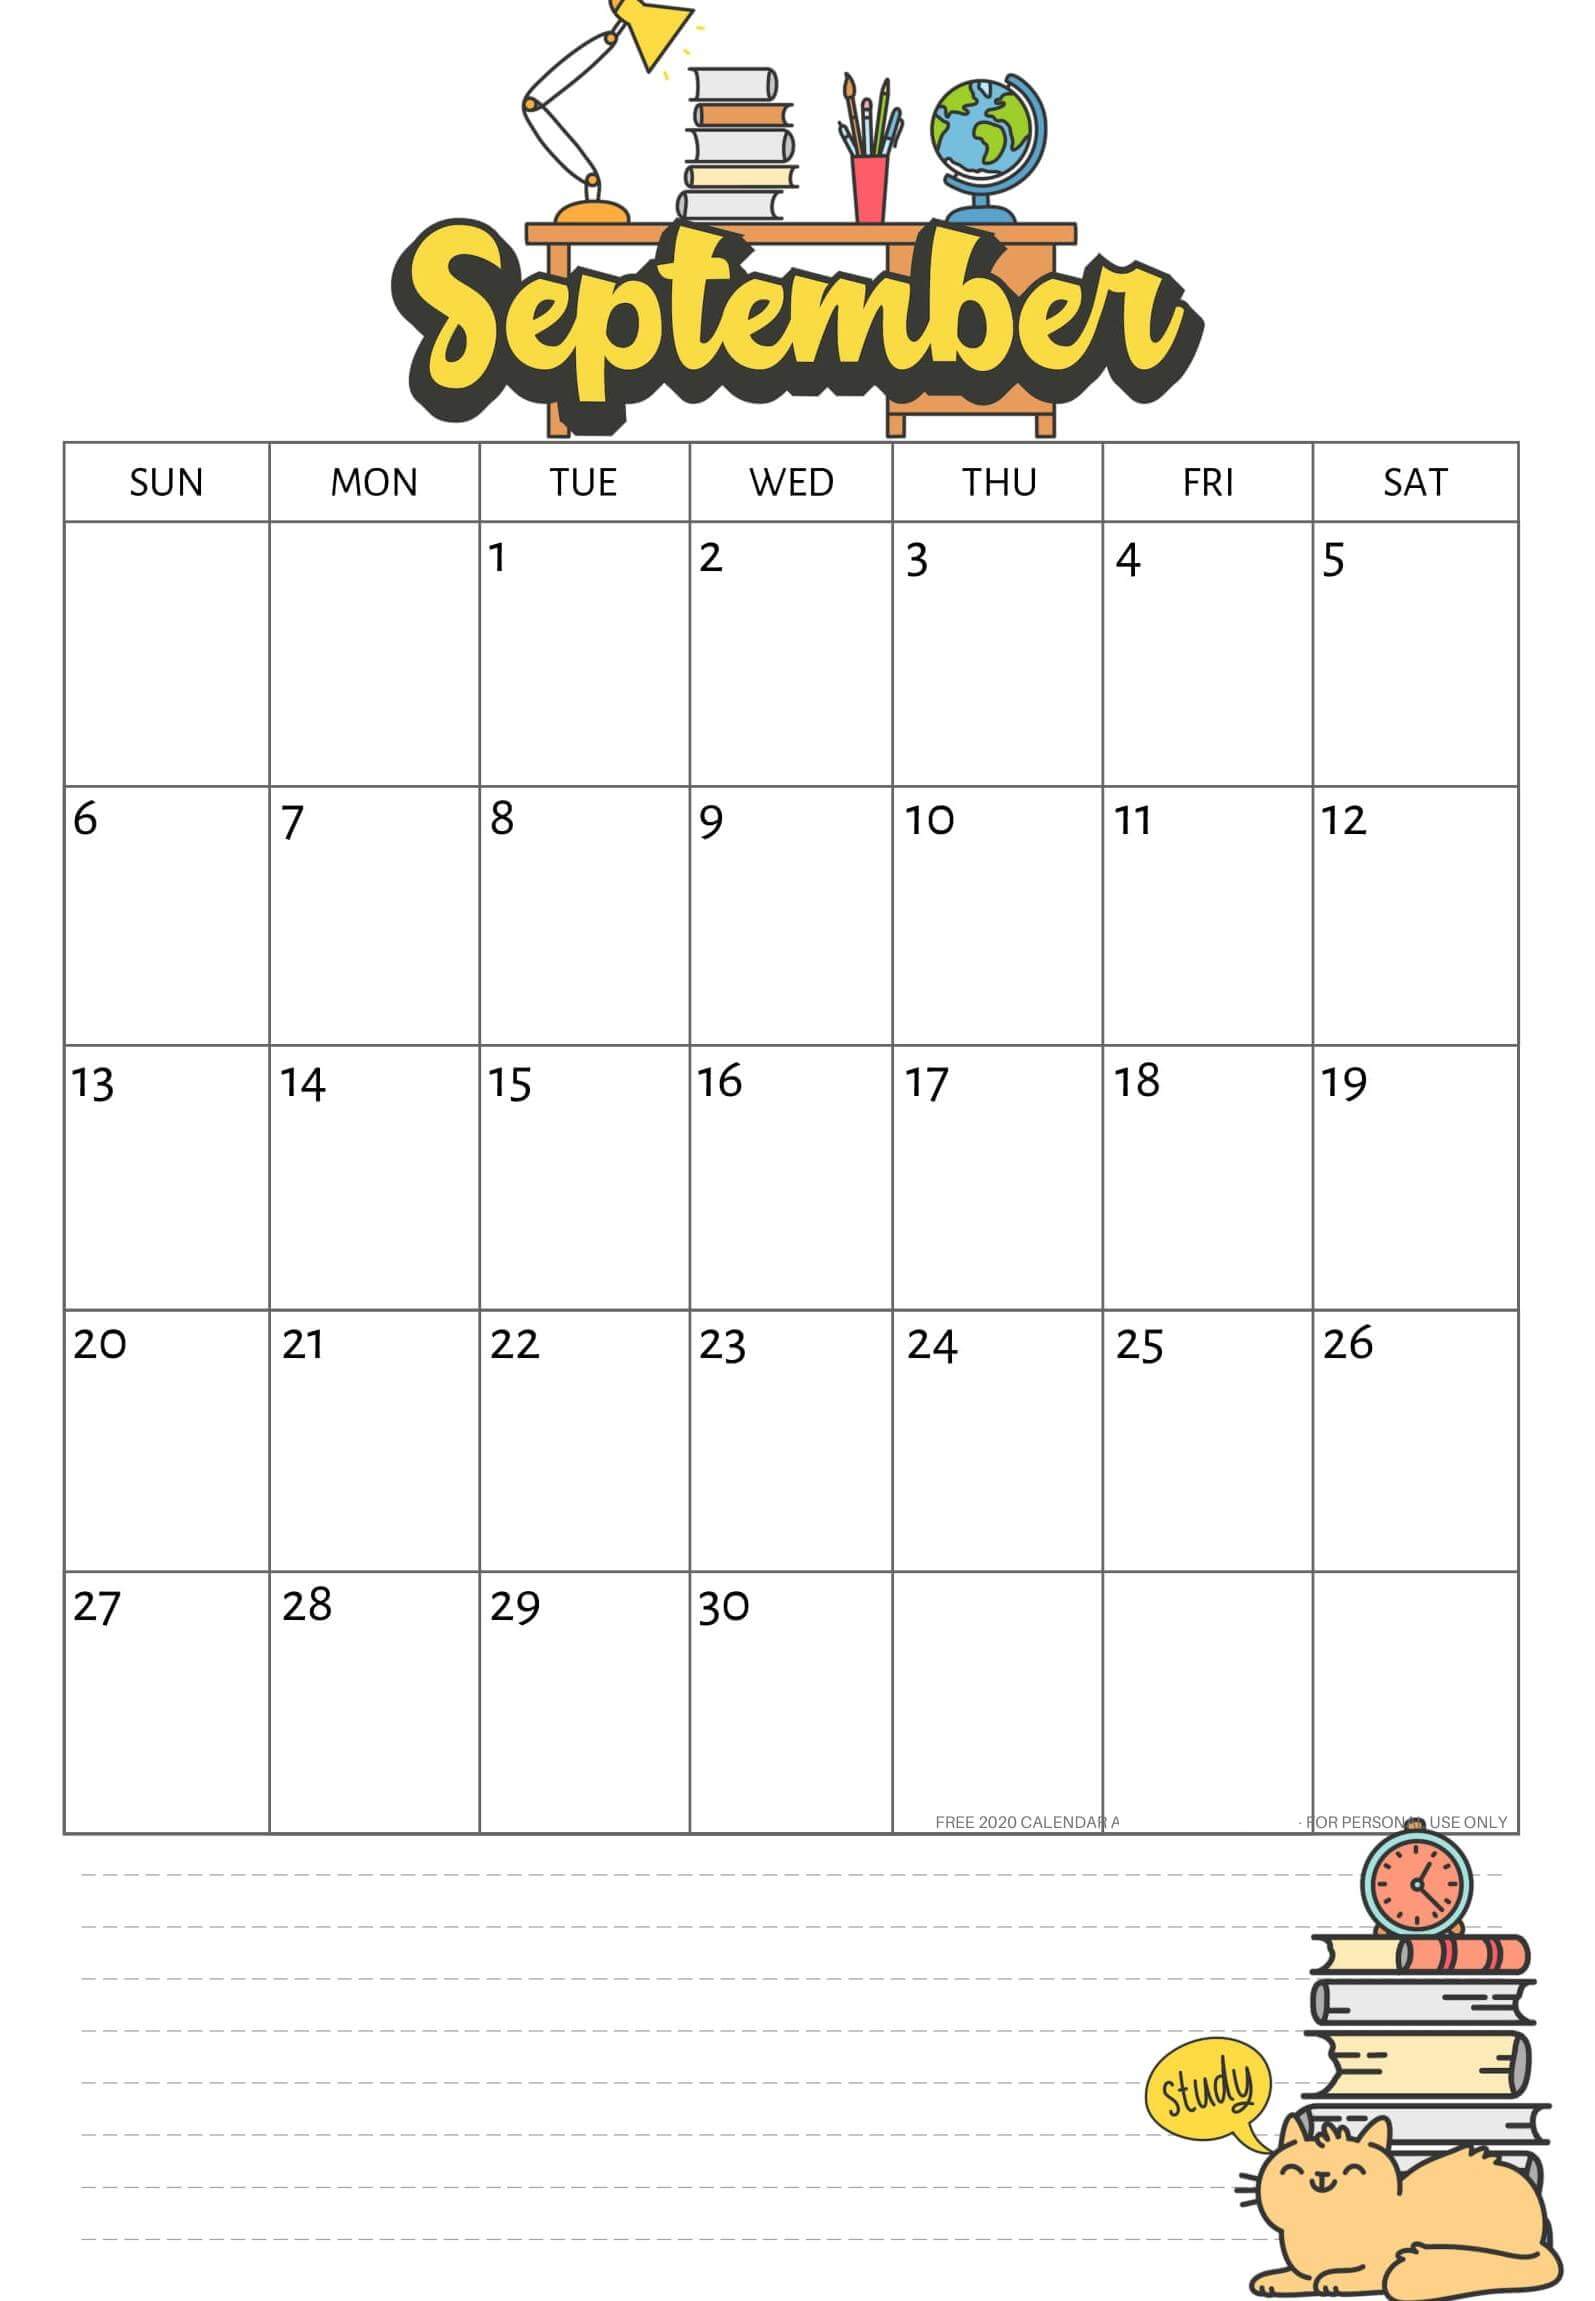 September 2020 Blank Calendar with notes